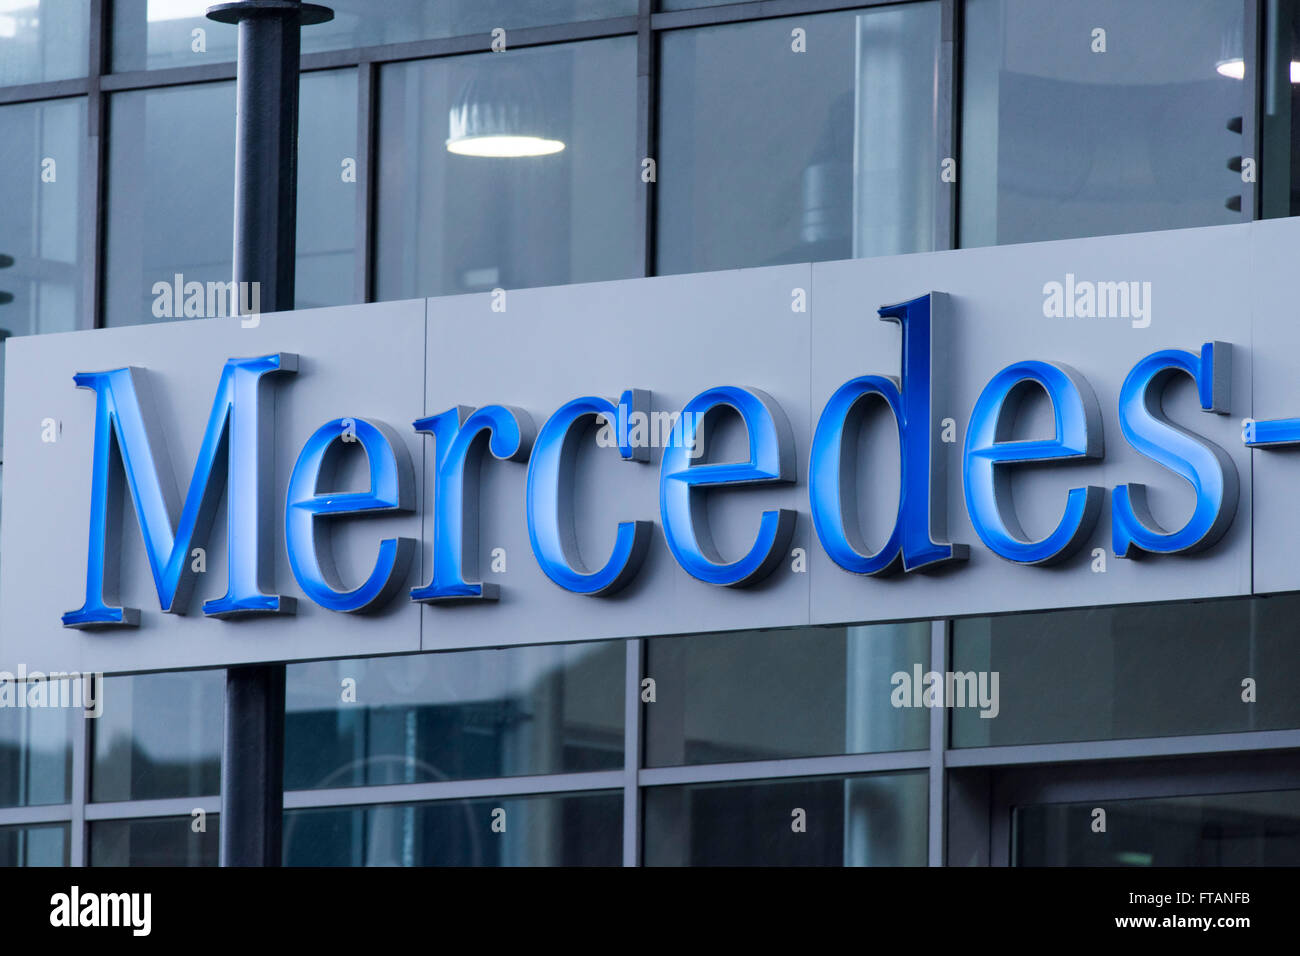 Mercedes sign logo. Stock Photo